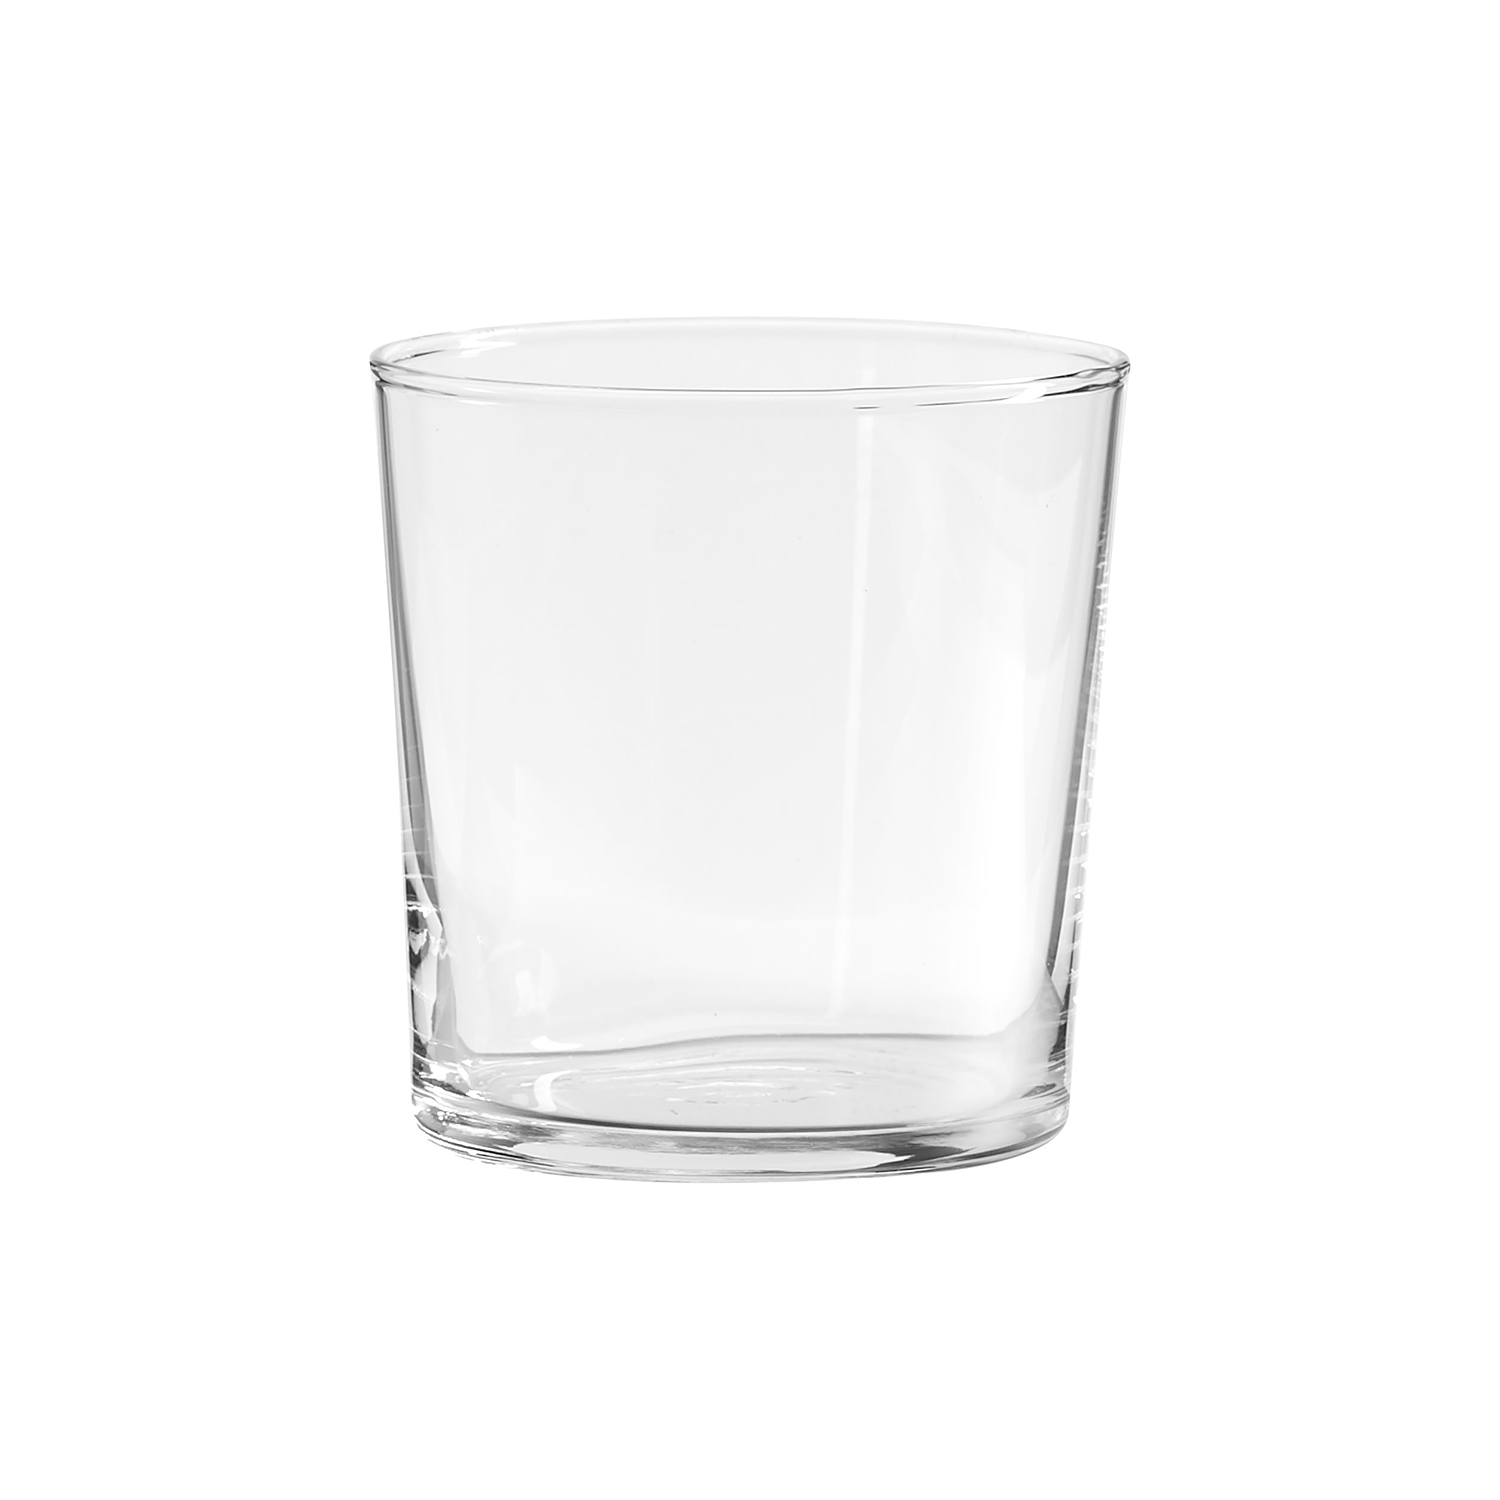 https://www.domino.com/uploads/2021/12/28/drinking-glasses-pottery-barn-bodega.png?auto=webp&optimize=high&width=100